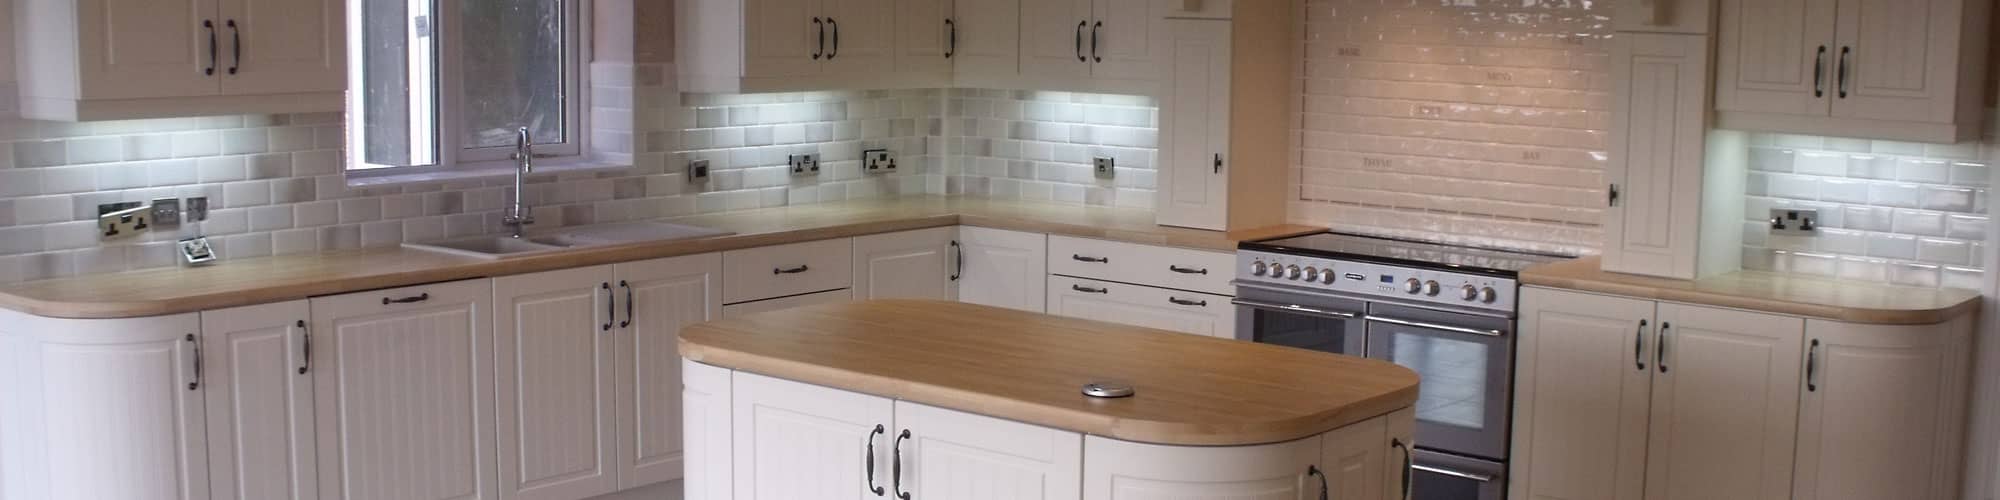 Bespoke fitted kitchen in Wrexham